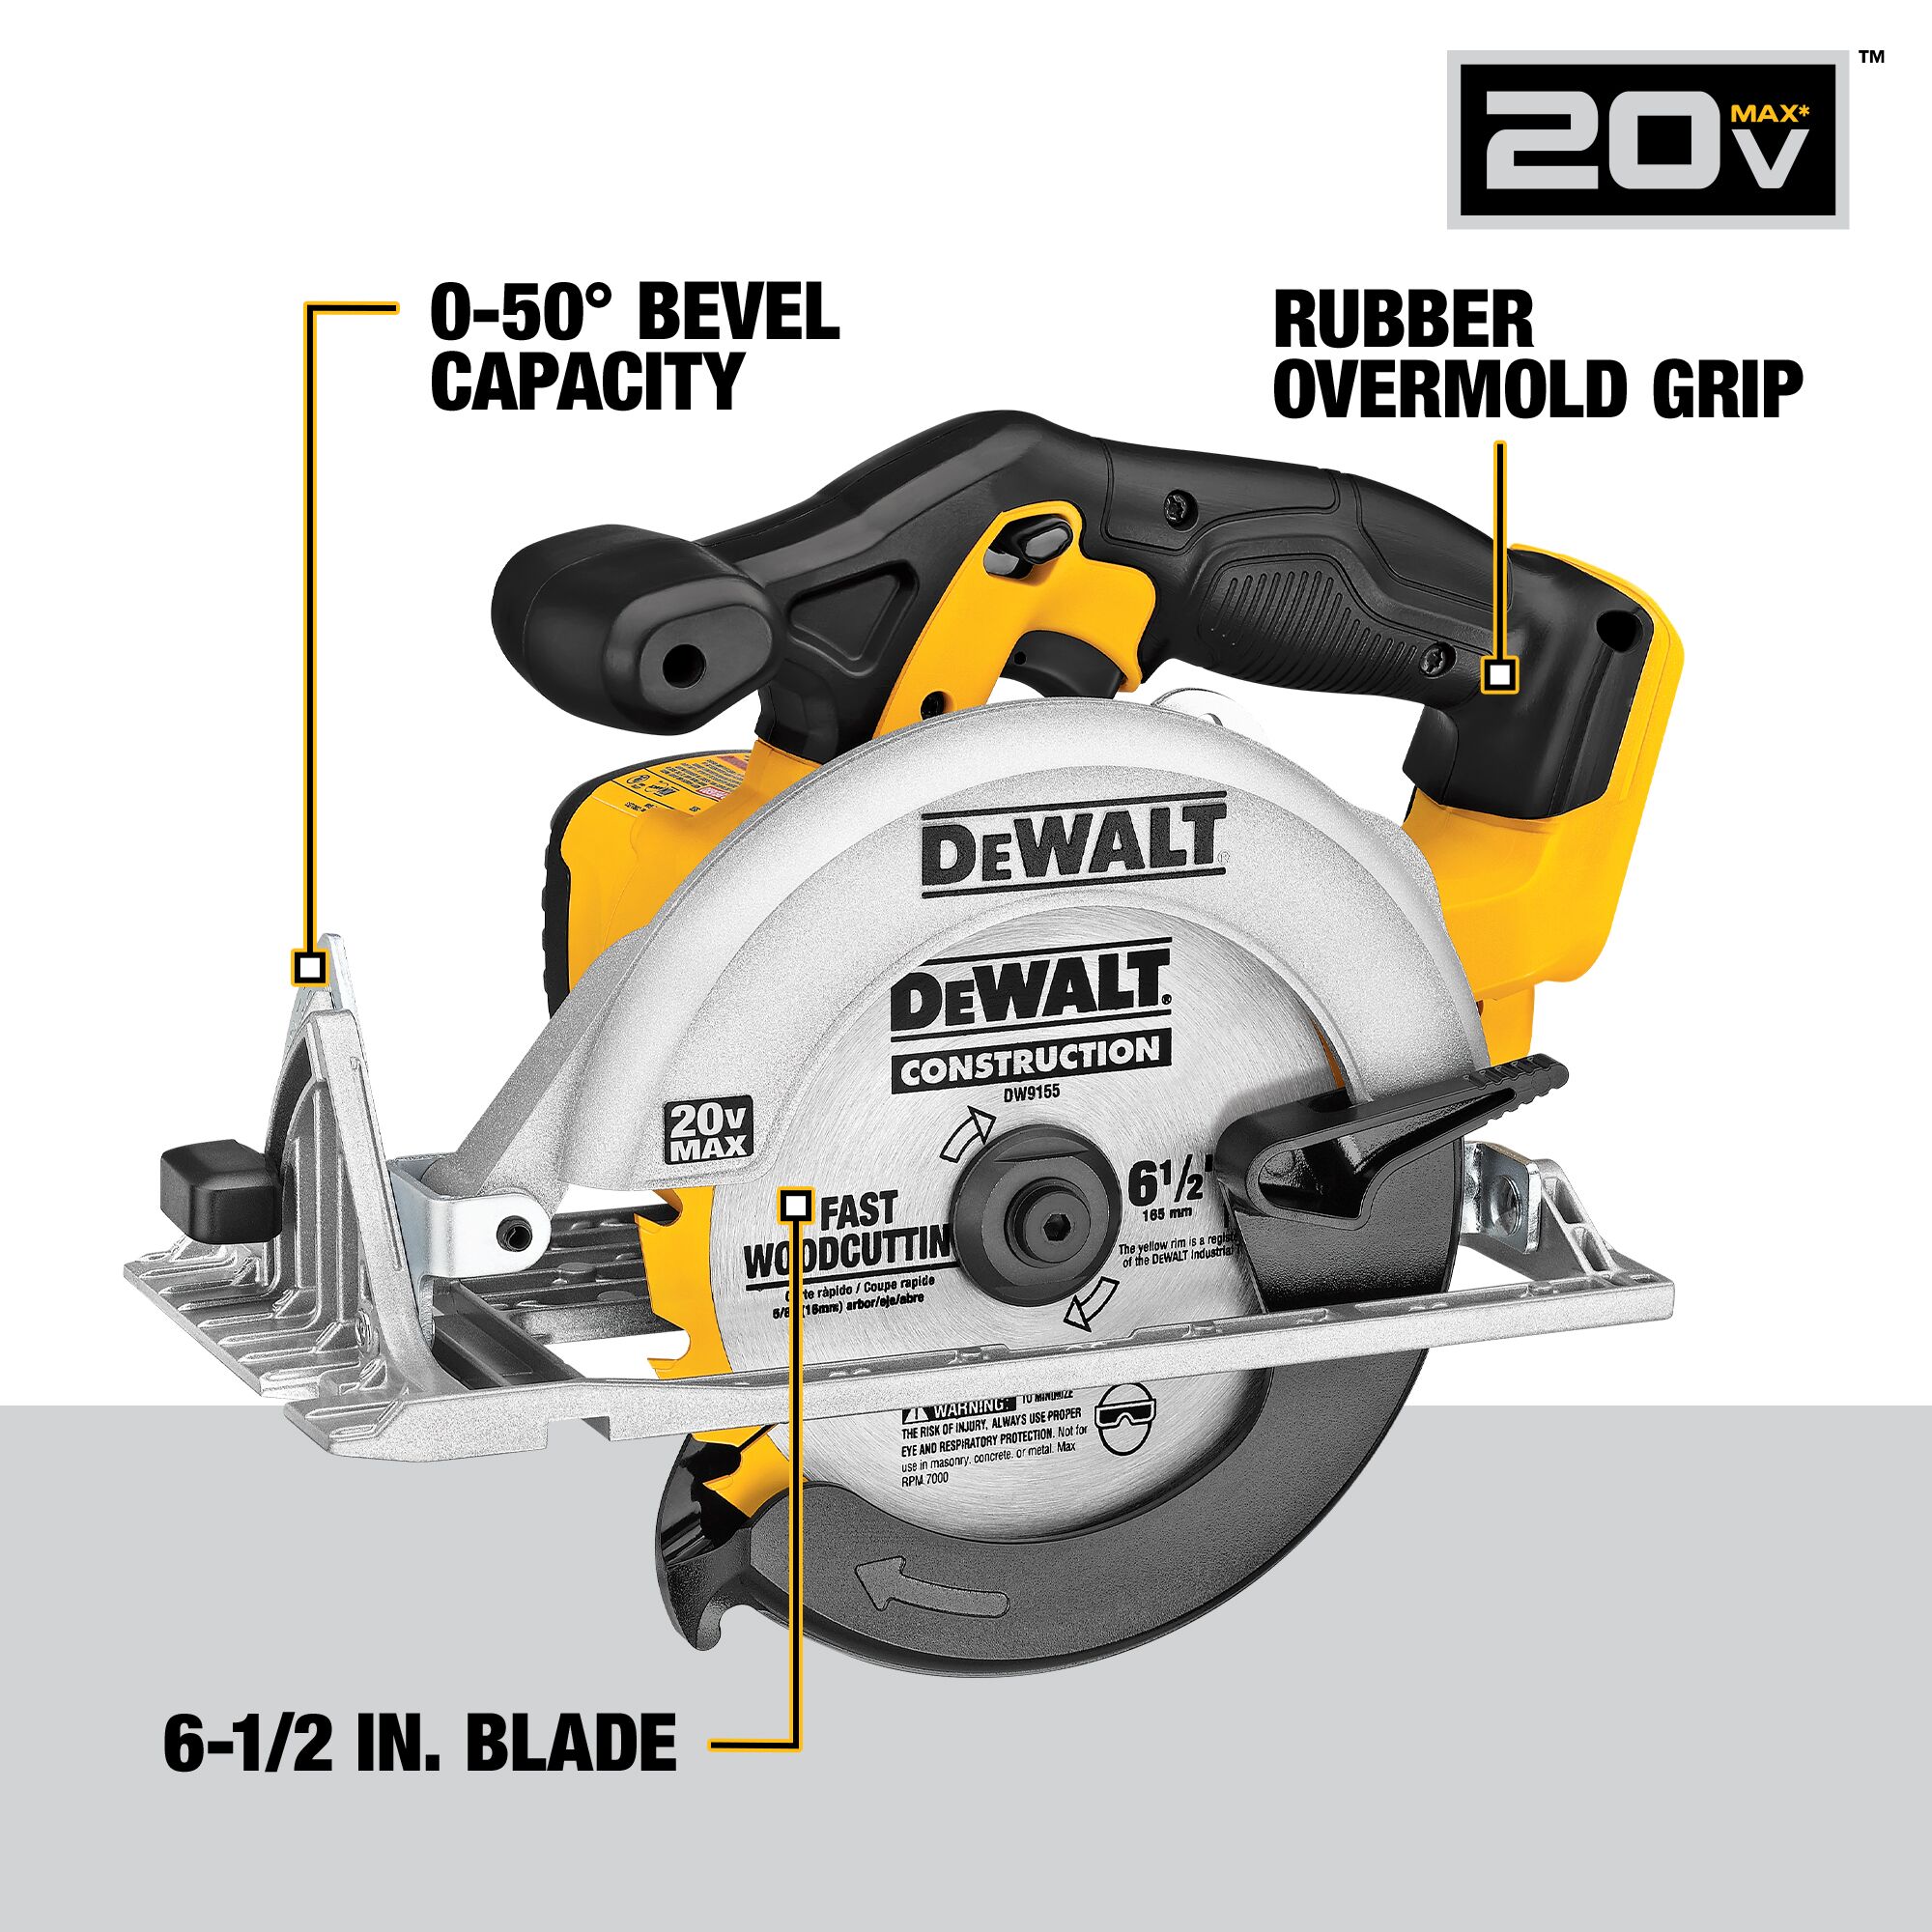 DEWALT 20-volt Max 6-1/2-in Cordless Circular Saw (Bare Tool) in the  Circular Saws department at